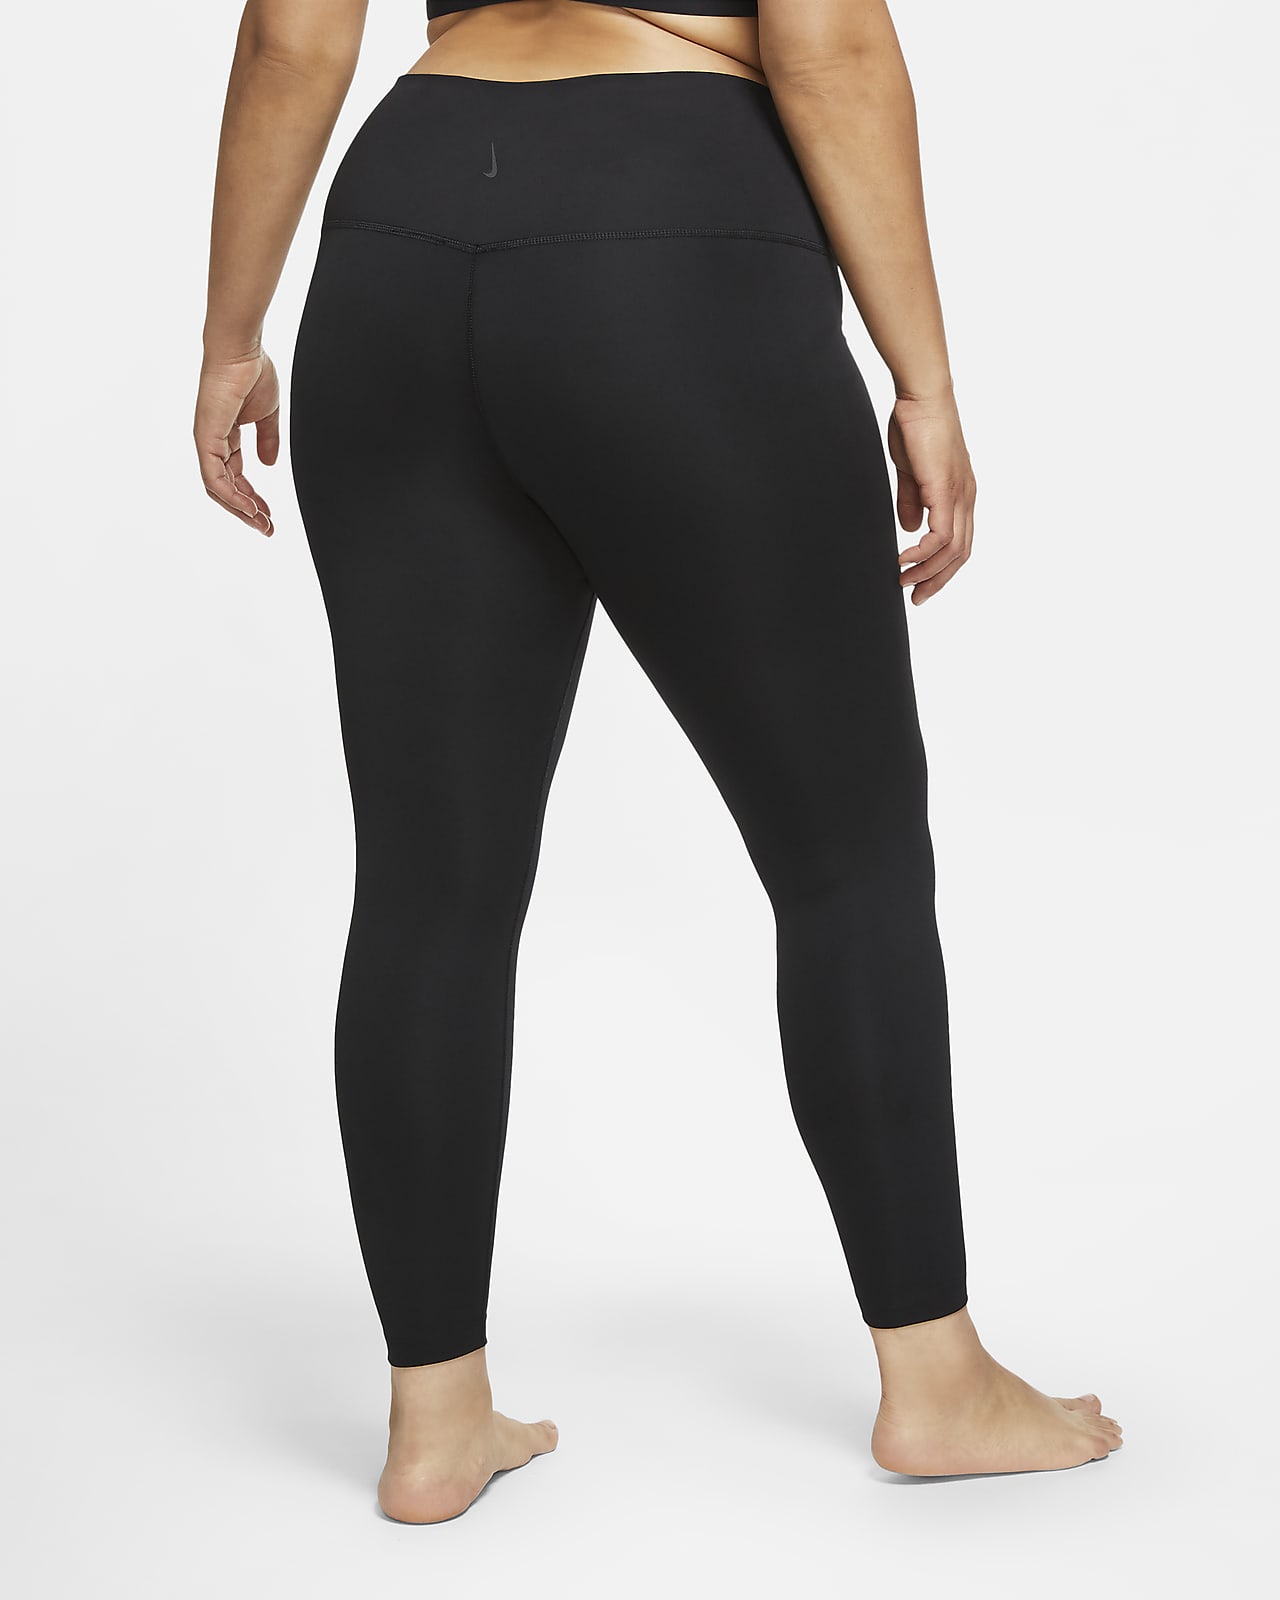 Nike Yoga Women's High-Waisted 7/8 Leggings (Plus Size). Nike.com